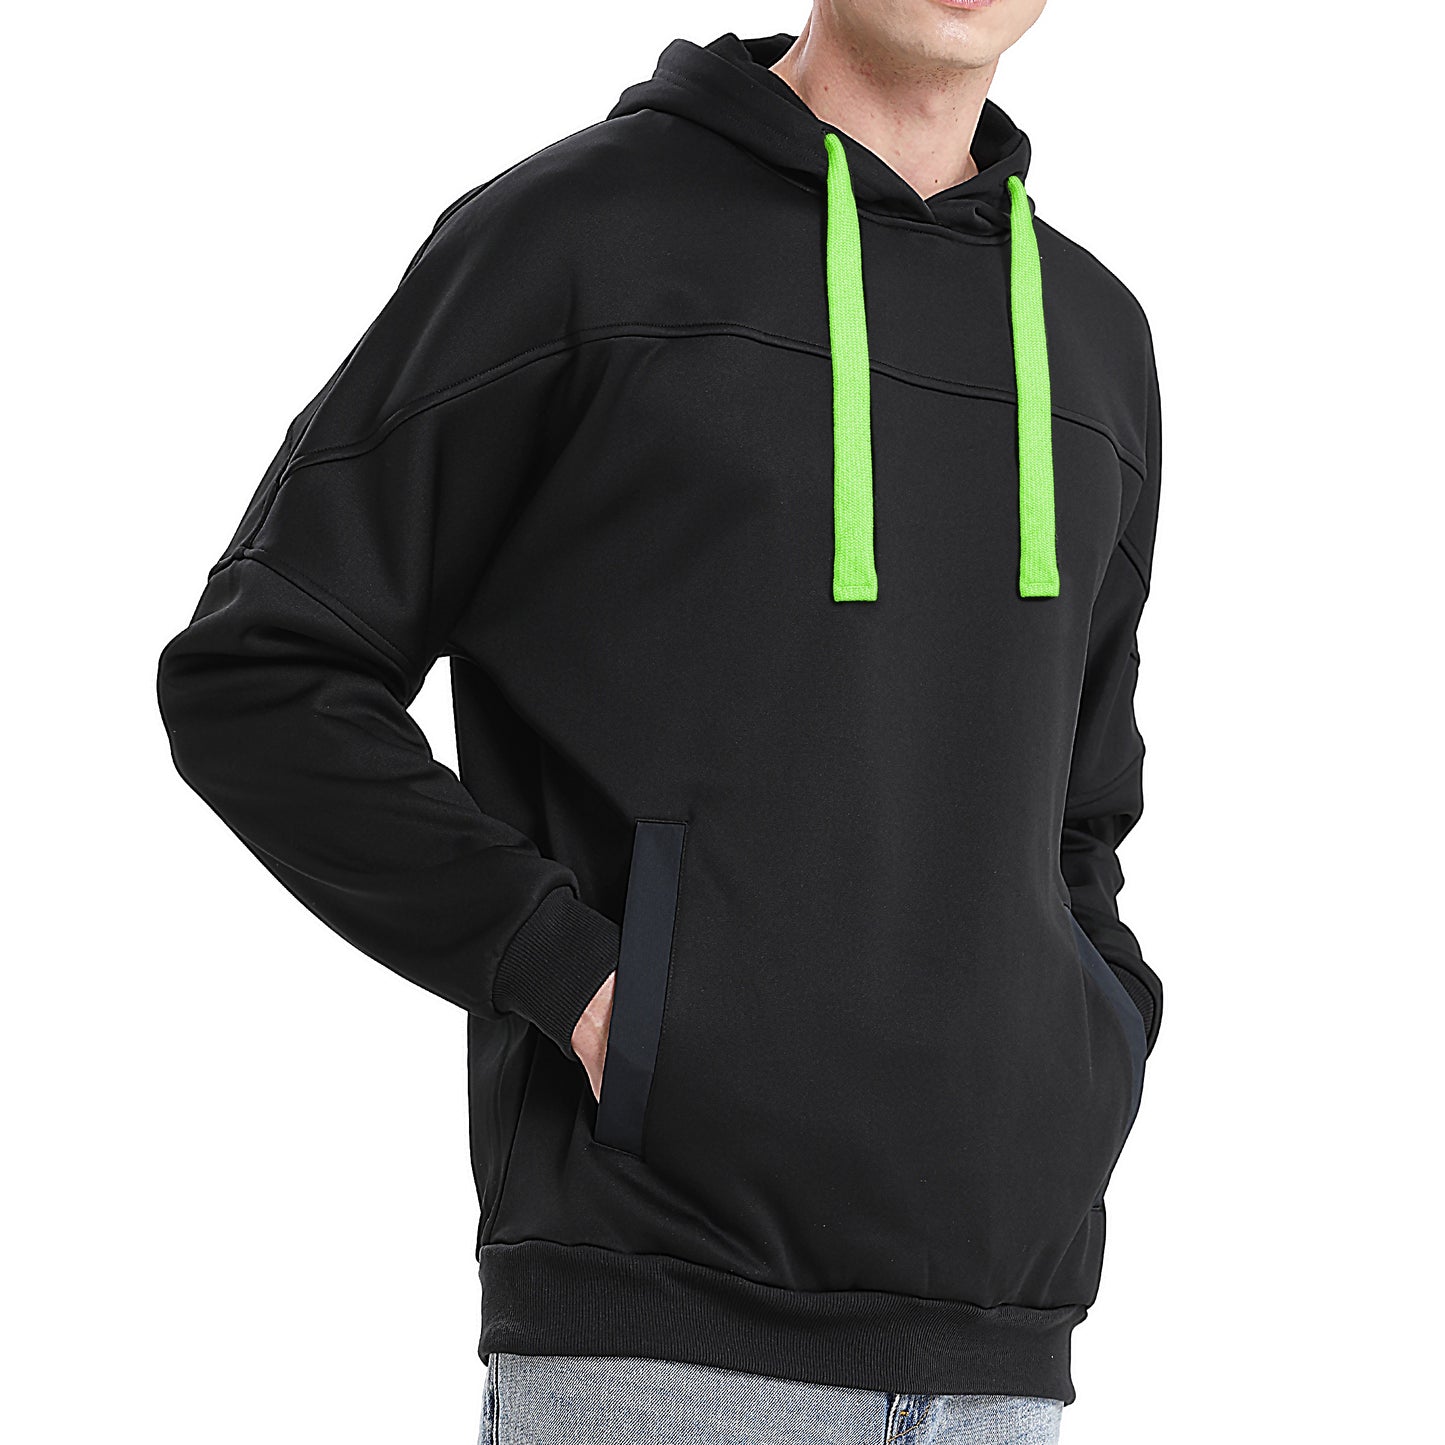 Drawstring Hoodie Jumper Fleece Sweatshirts Plain Black with Contrast drawstring